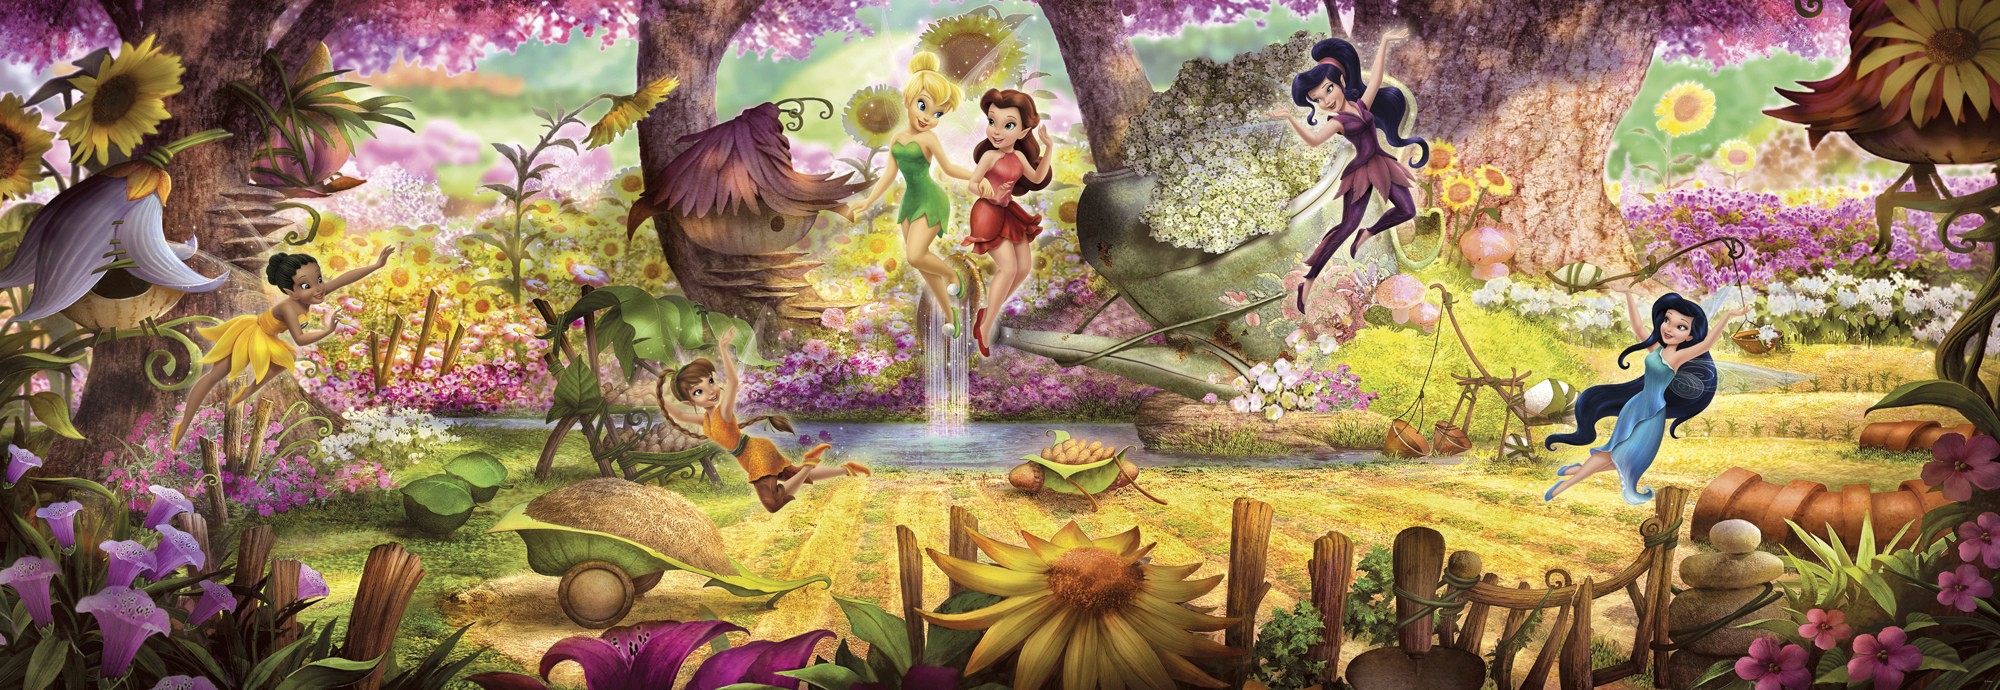 Disney csingiling tündér erdő fali poszter